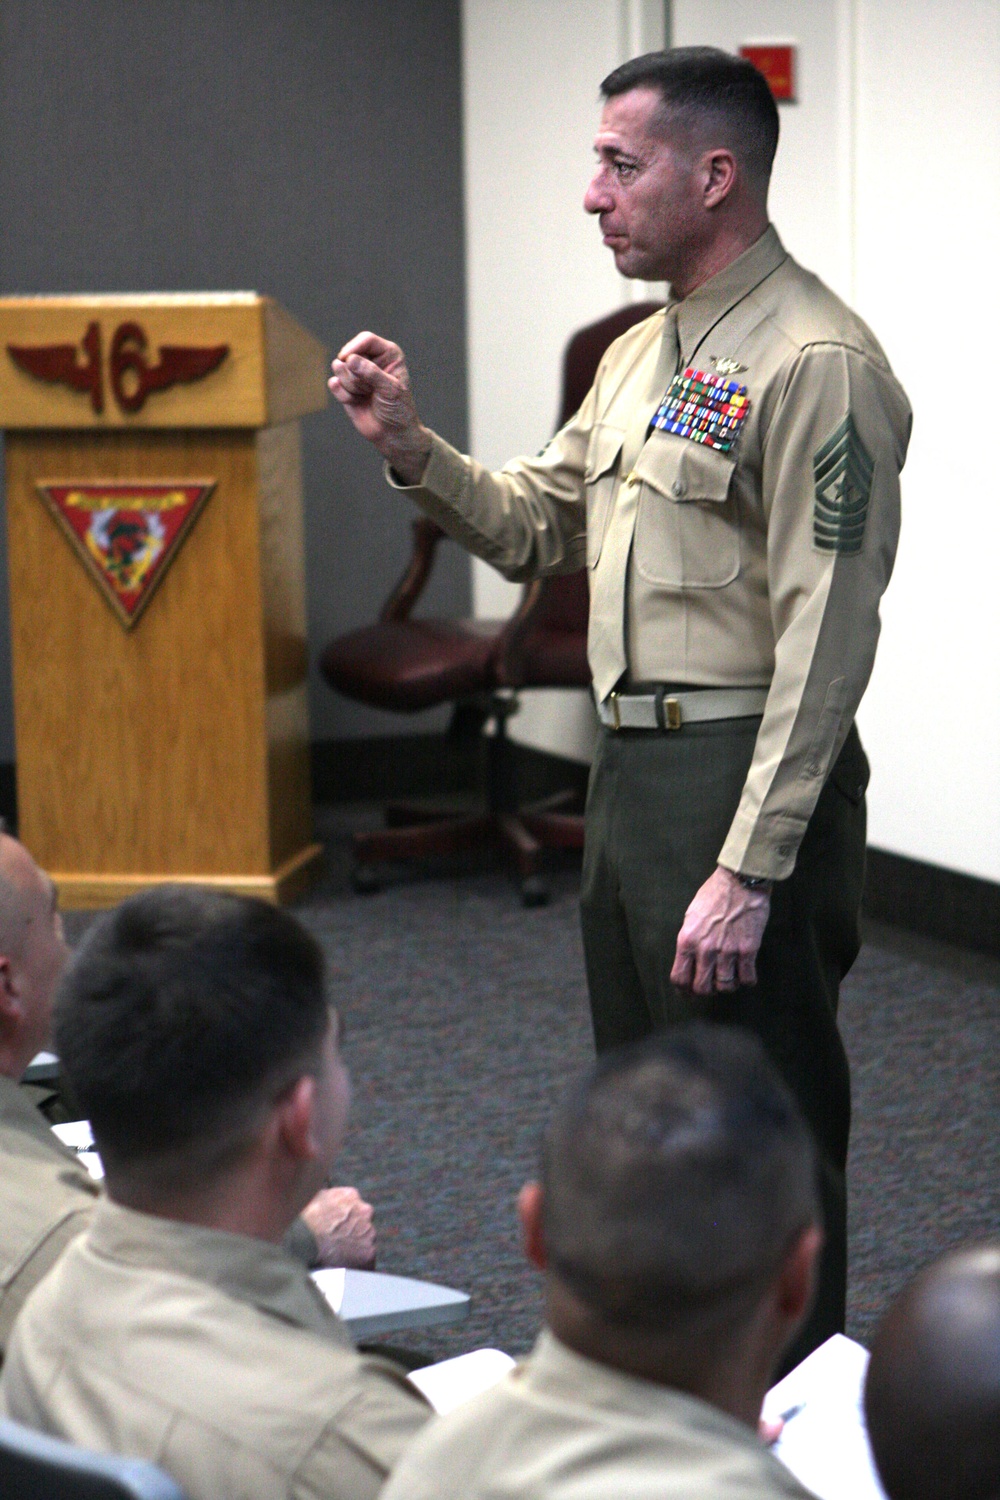 Staff NCOs Sharpen Leadership Skills at Staff Sergeants Symposium